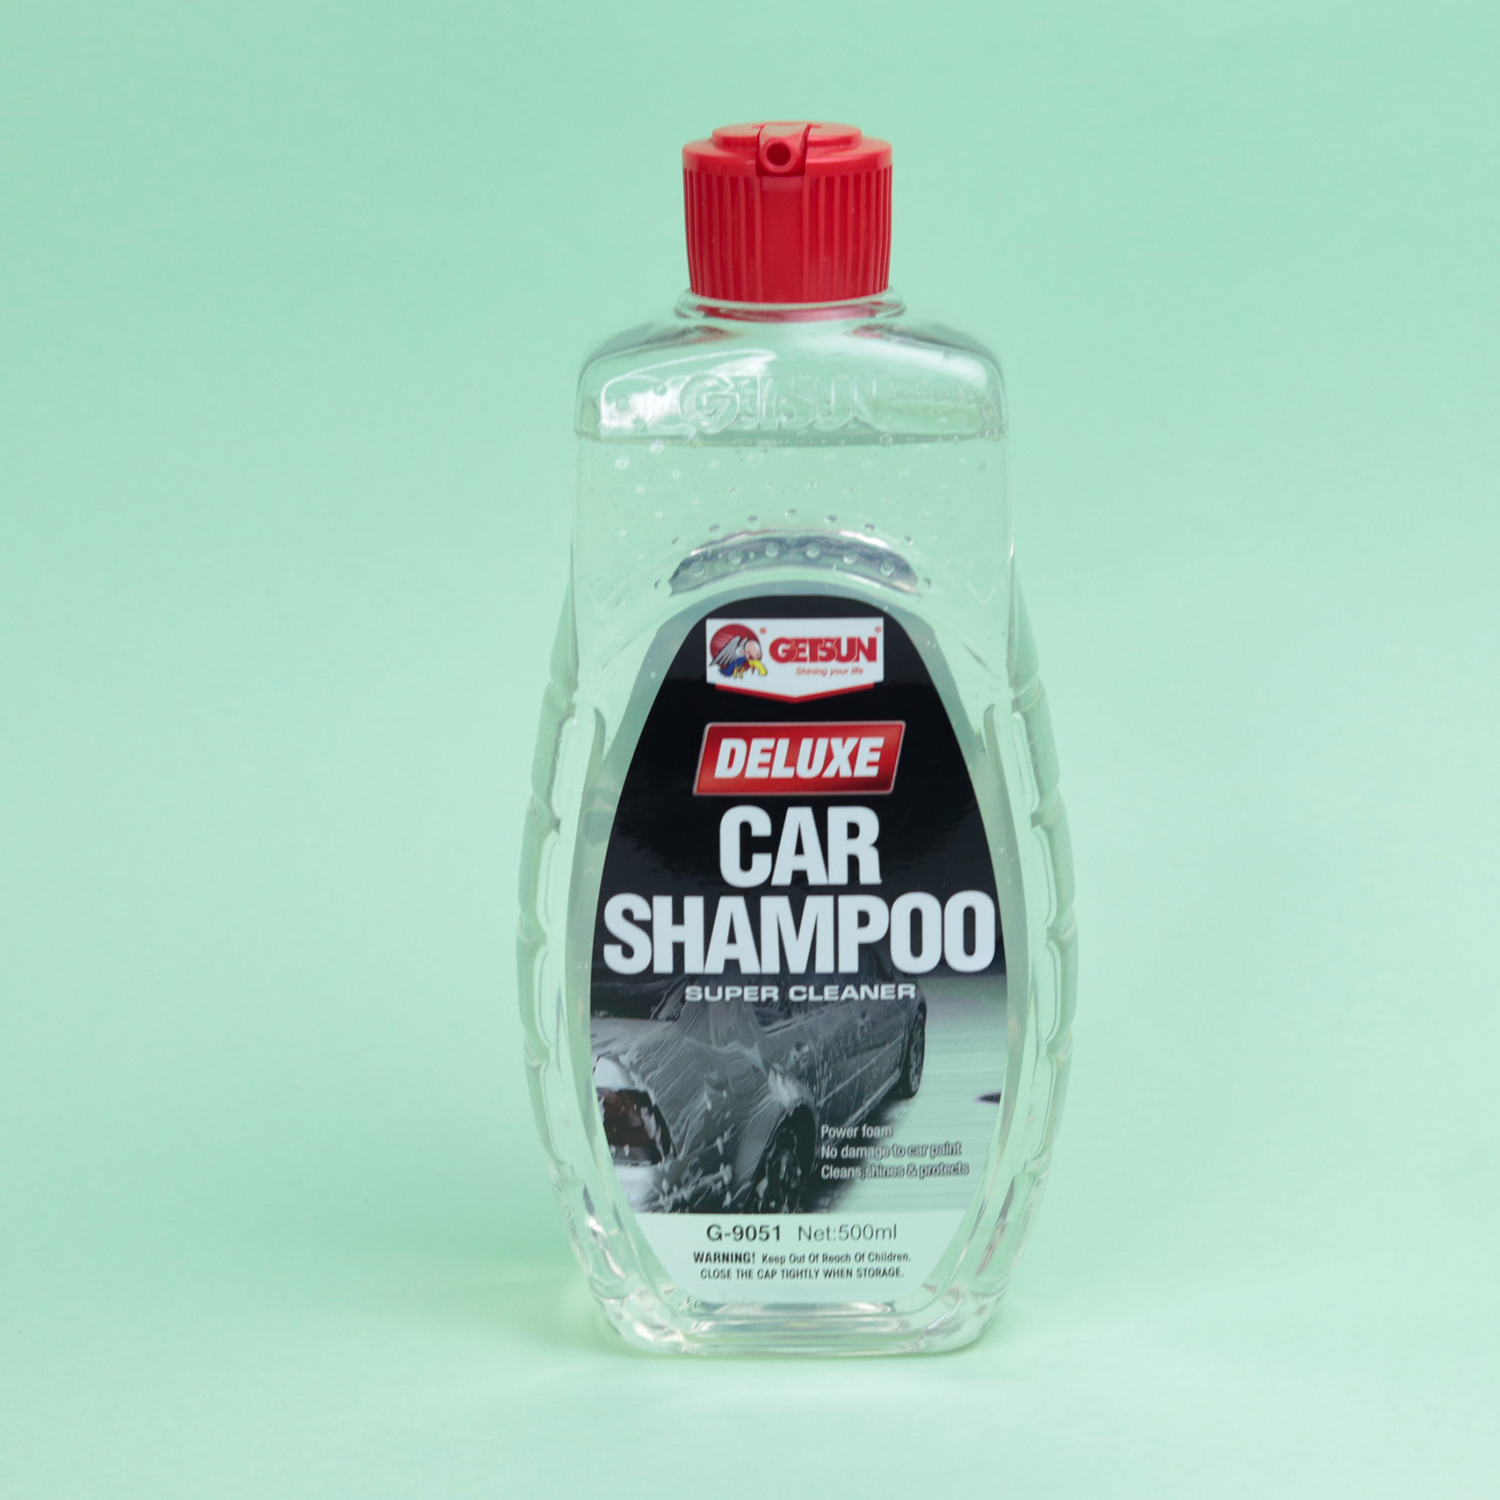 Getsun Car Shampoo - 500 ml